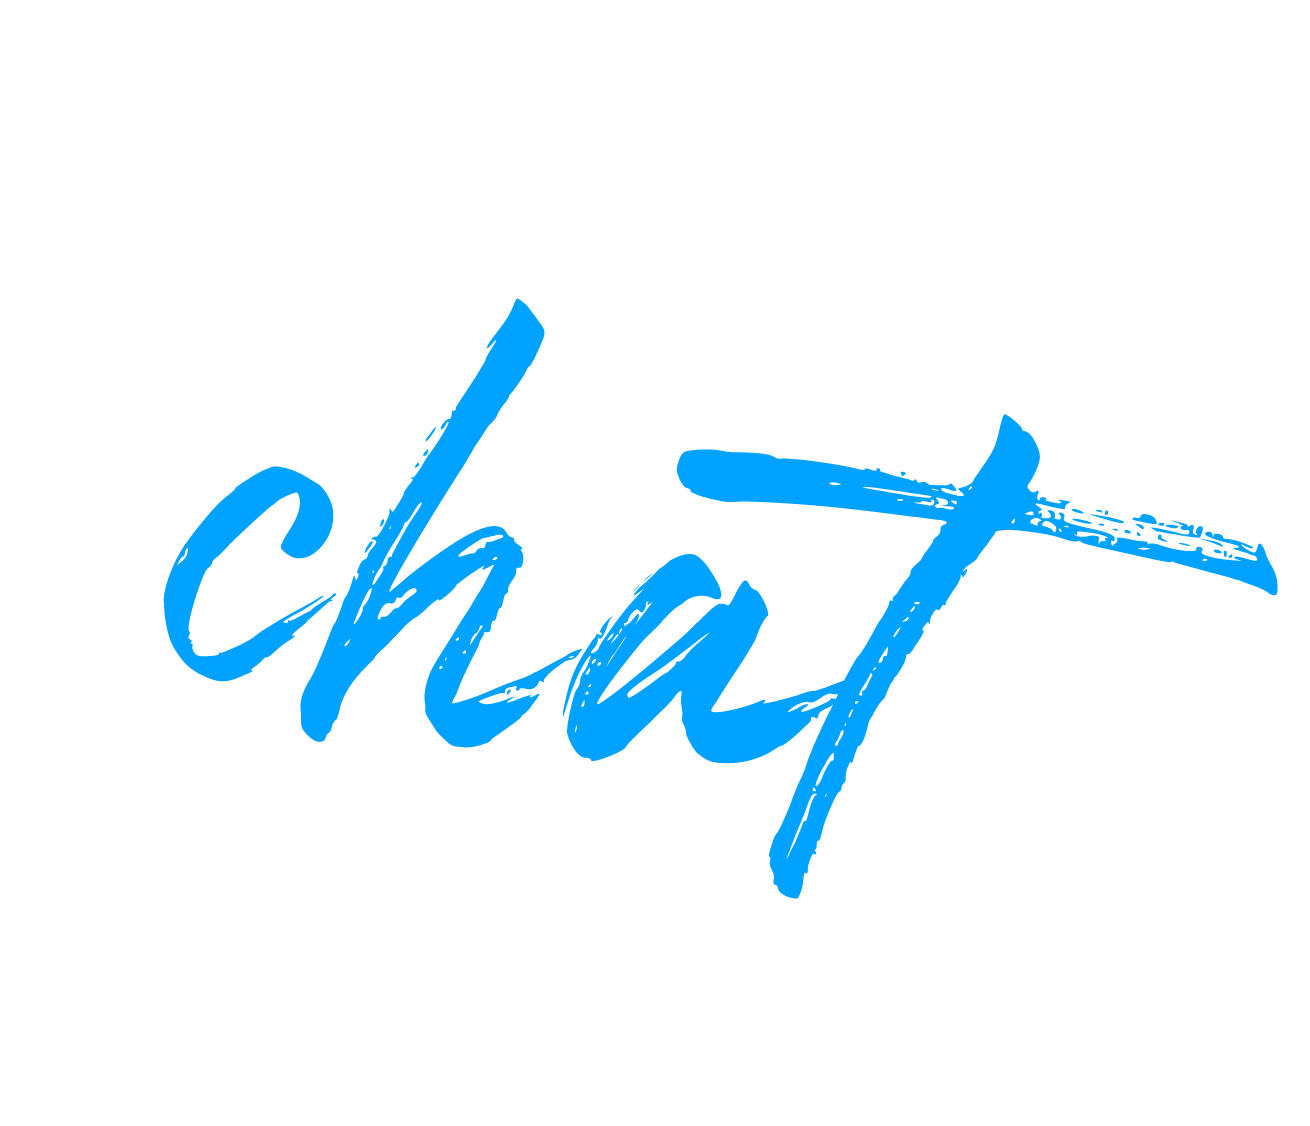 Vipchatguys.com site for cam guys